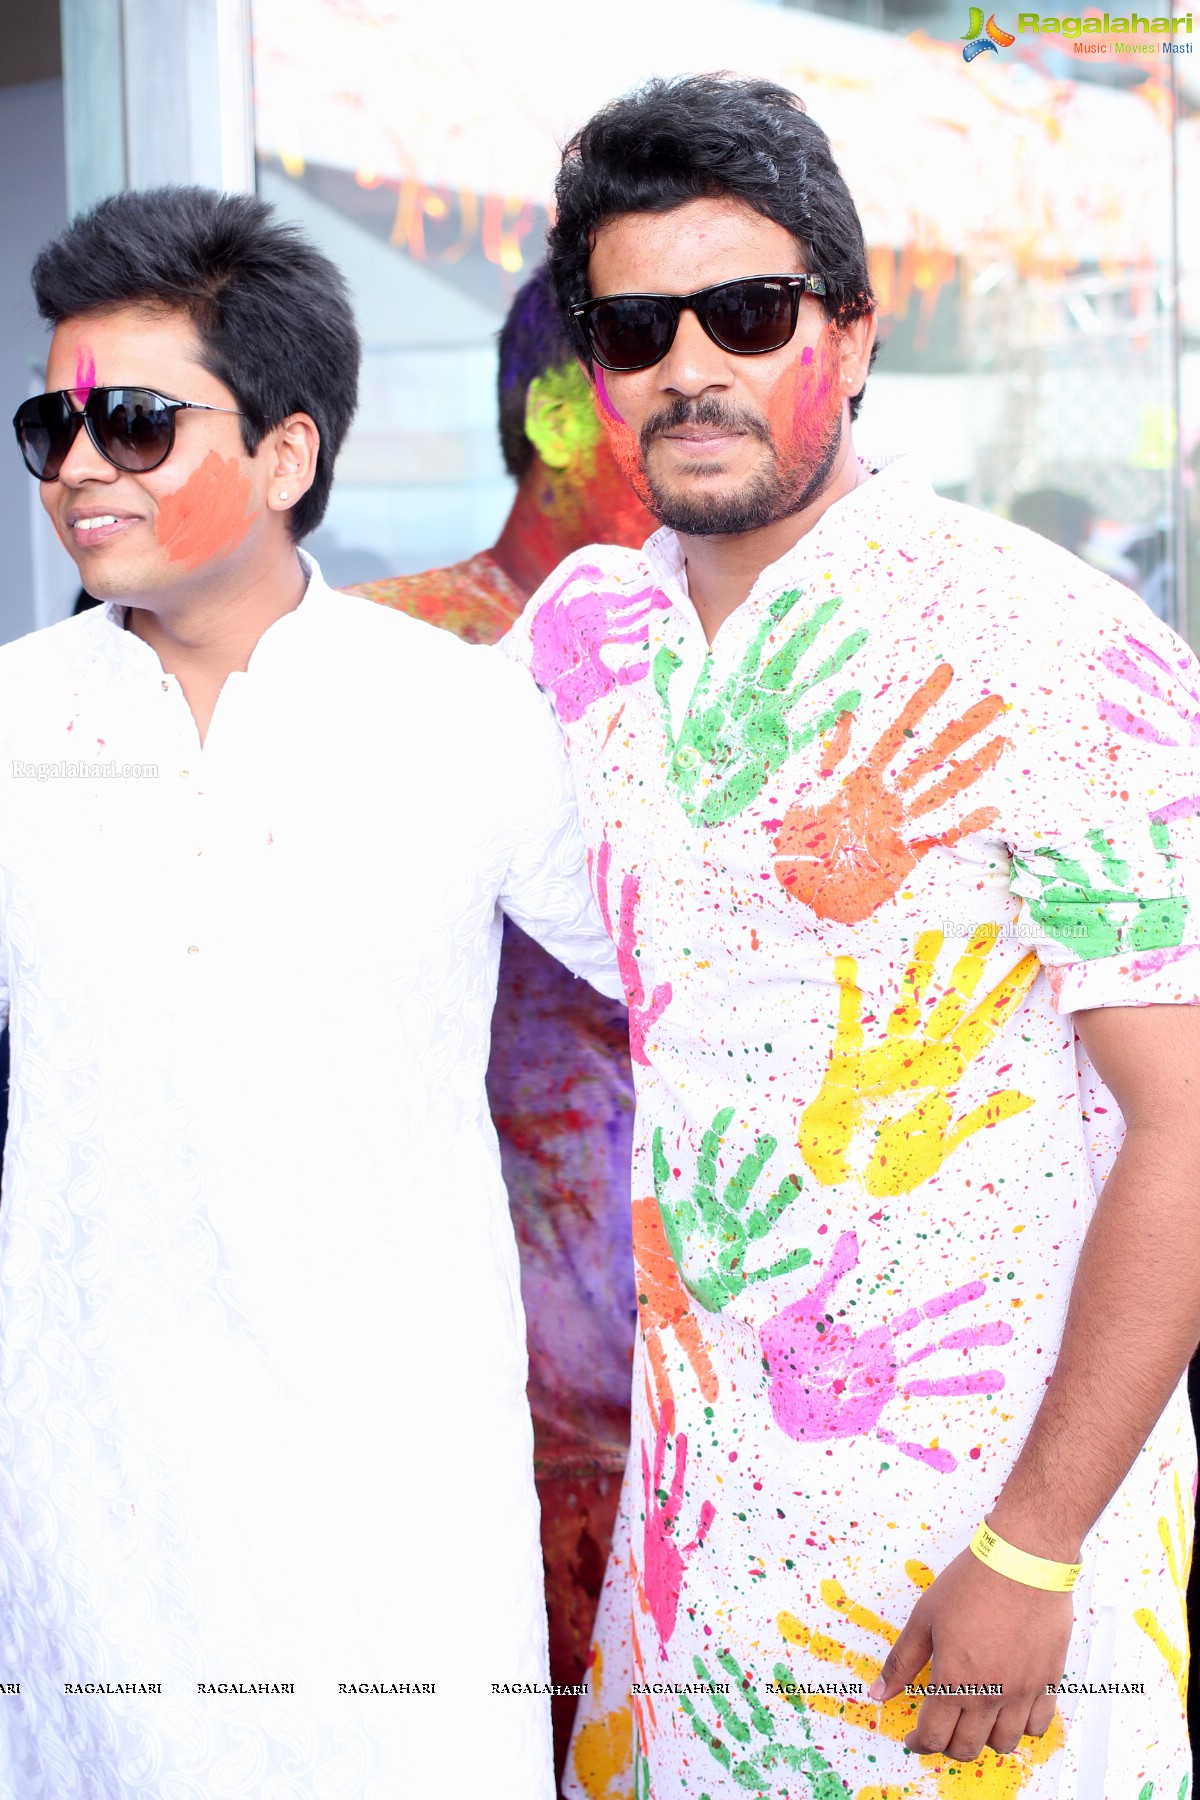 Pitars Holi Hyderabad 2015